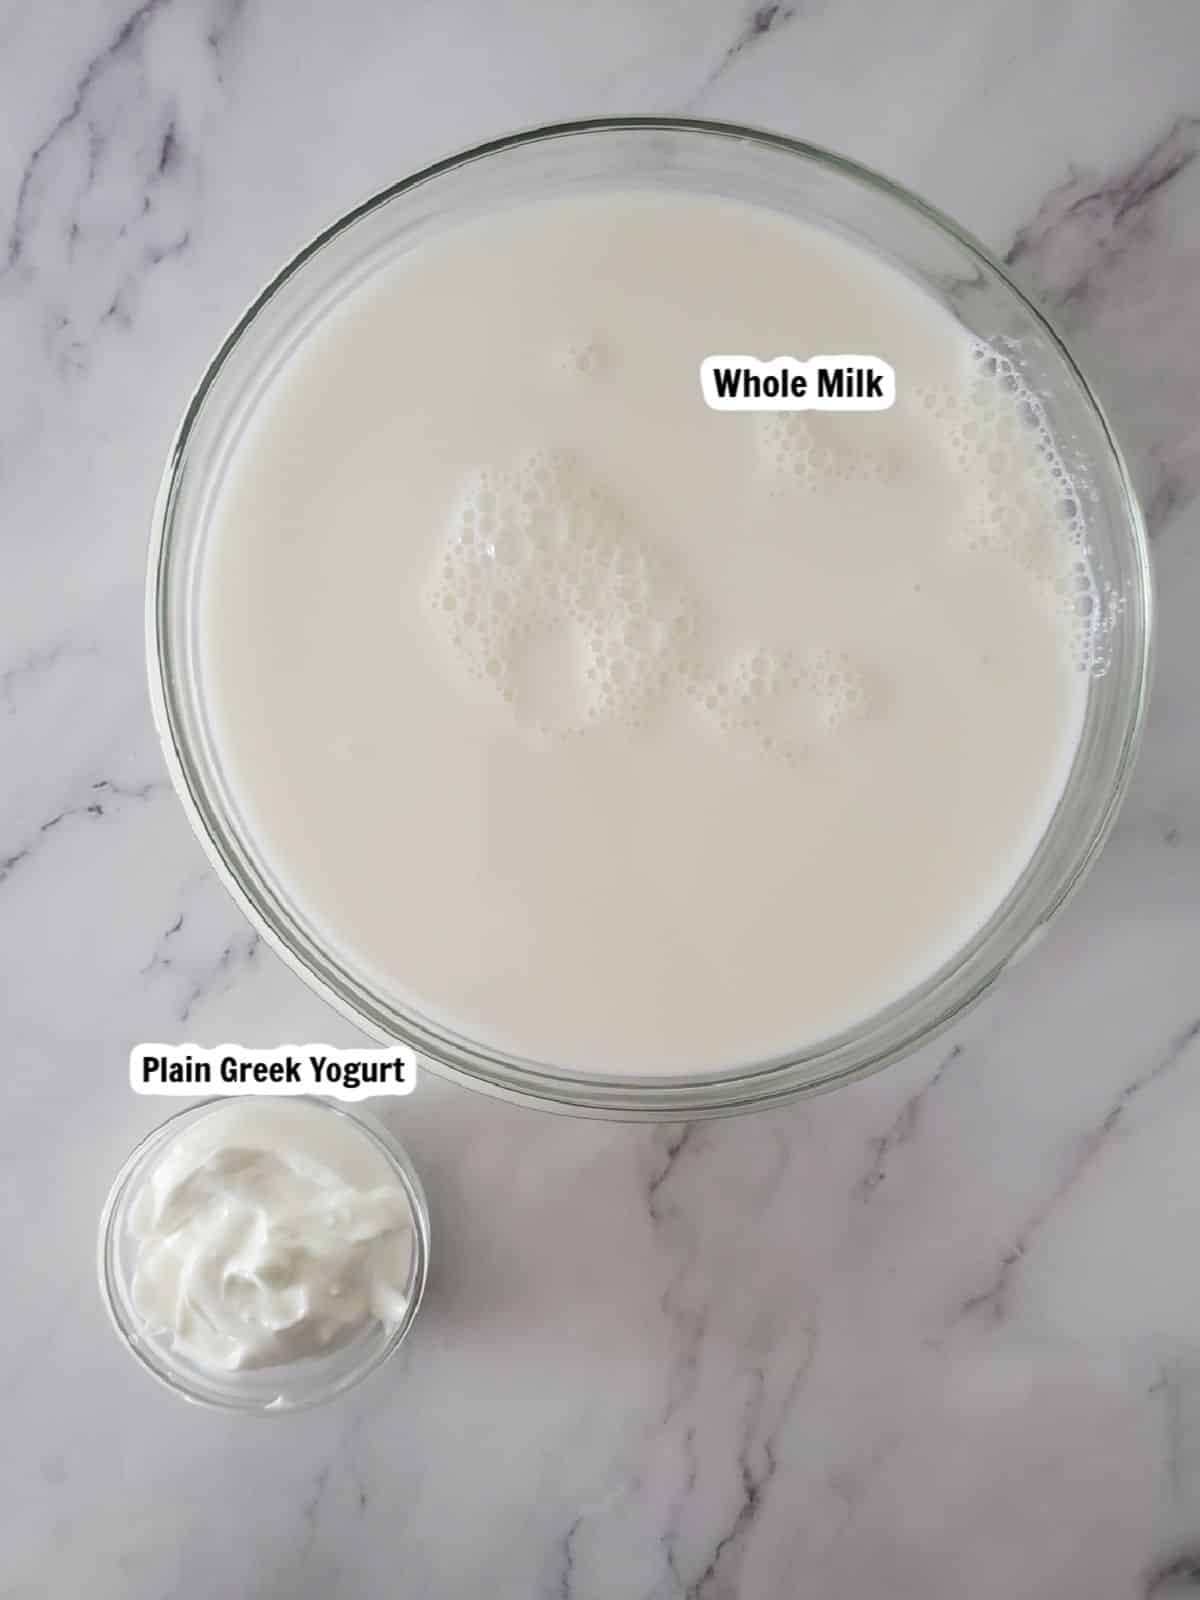 Ingredients for homemade yogurt.